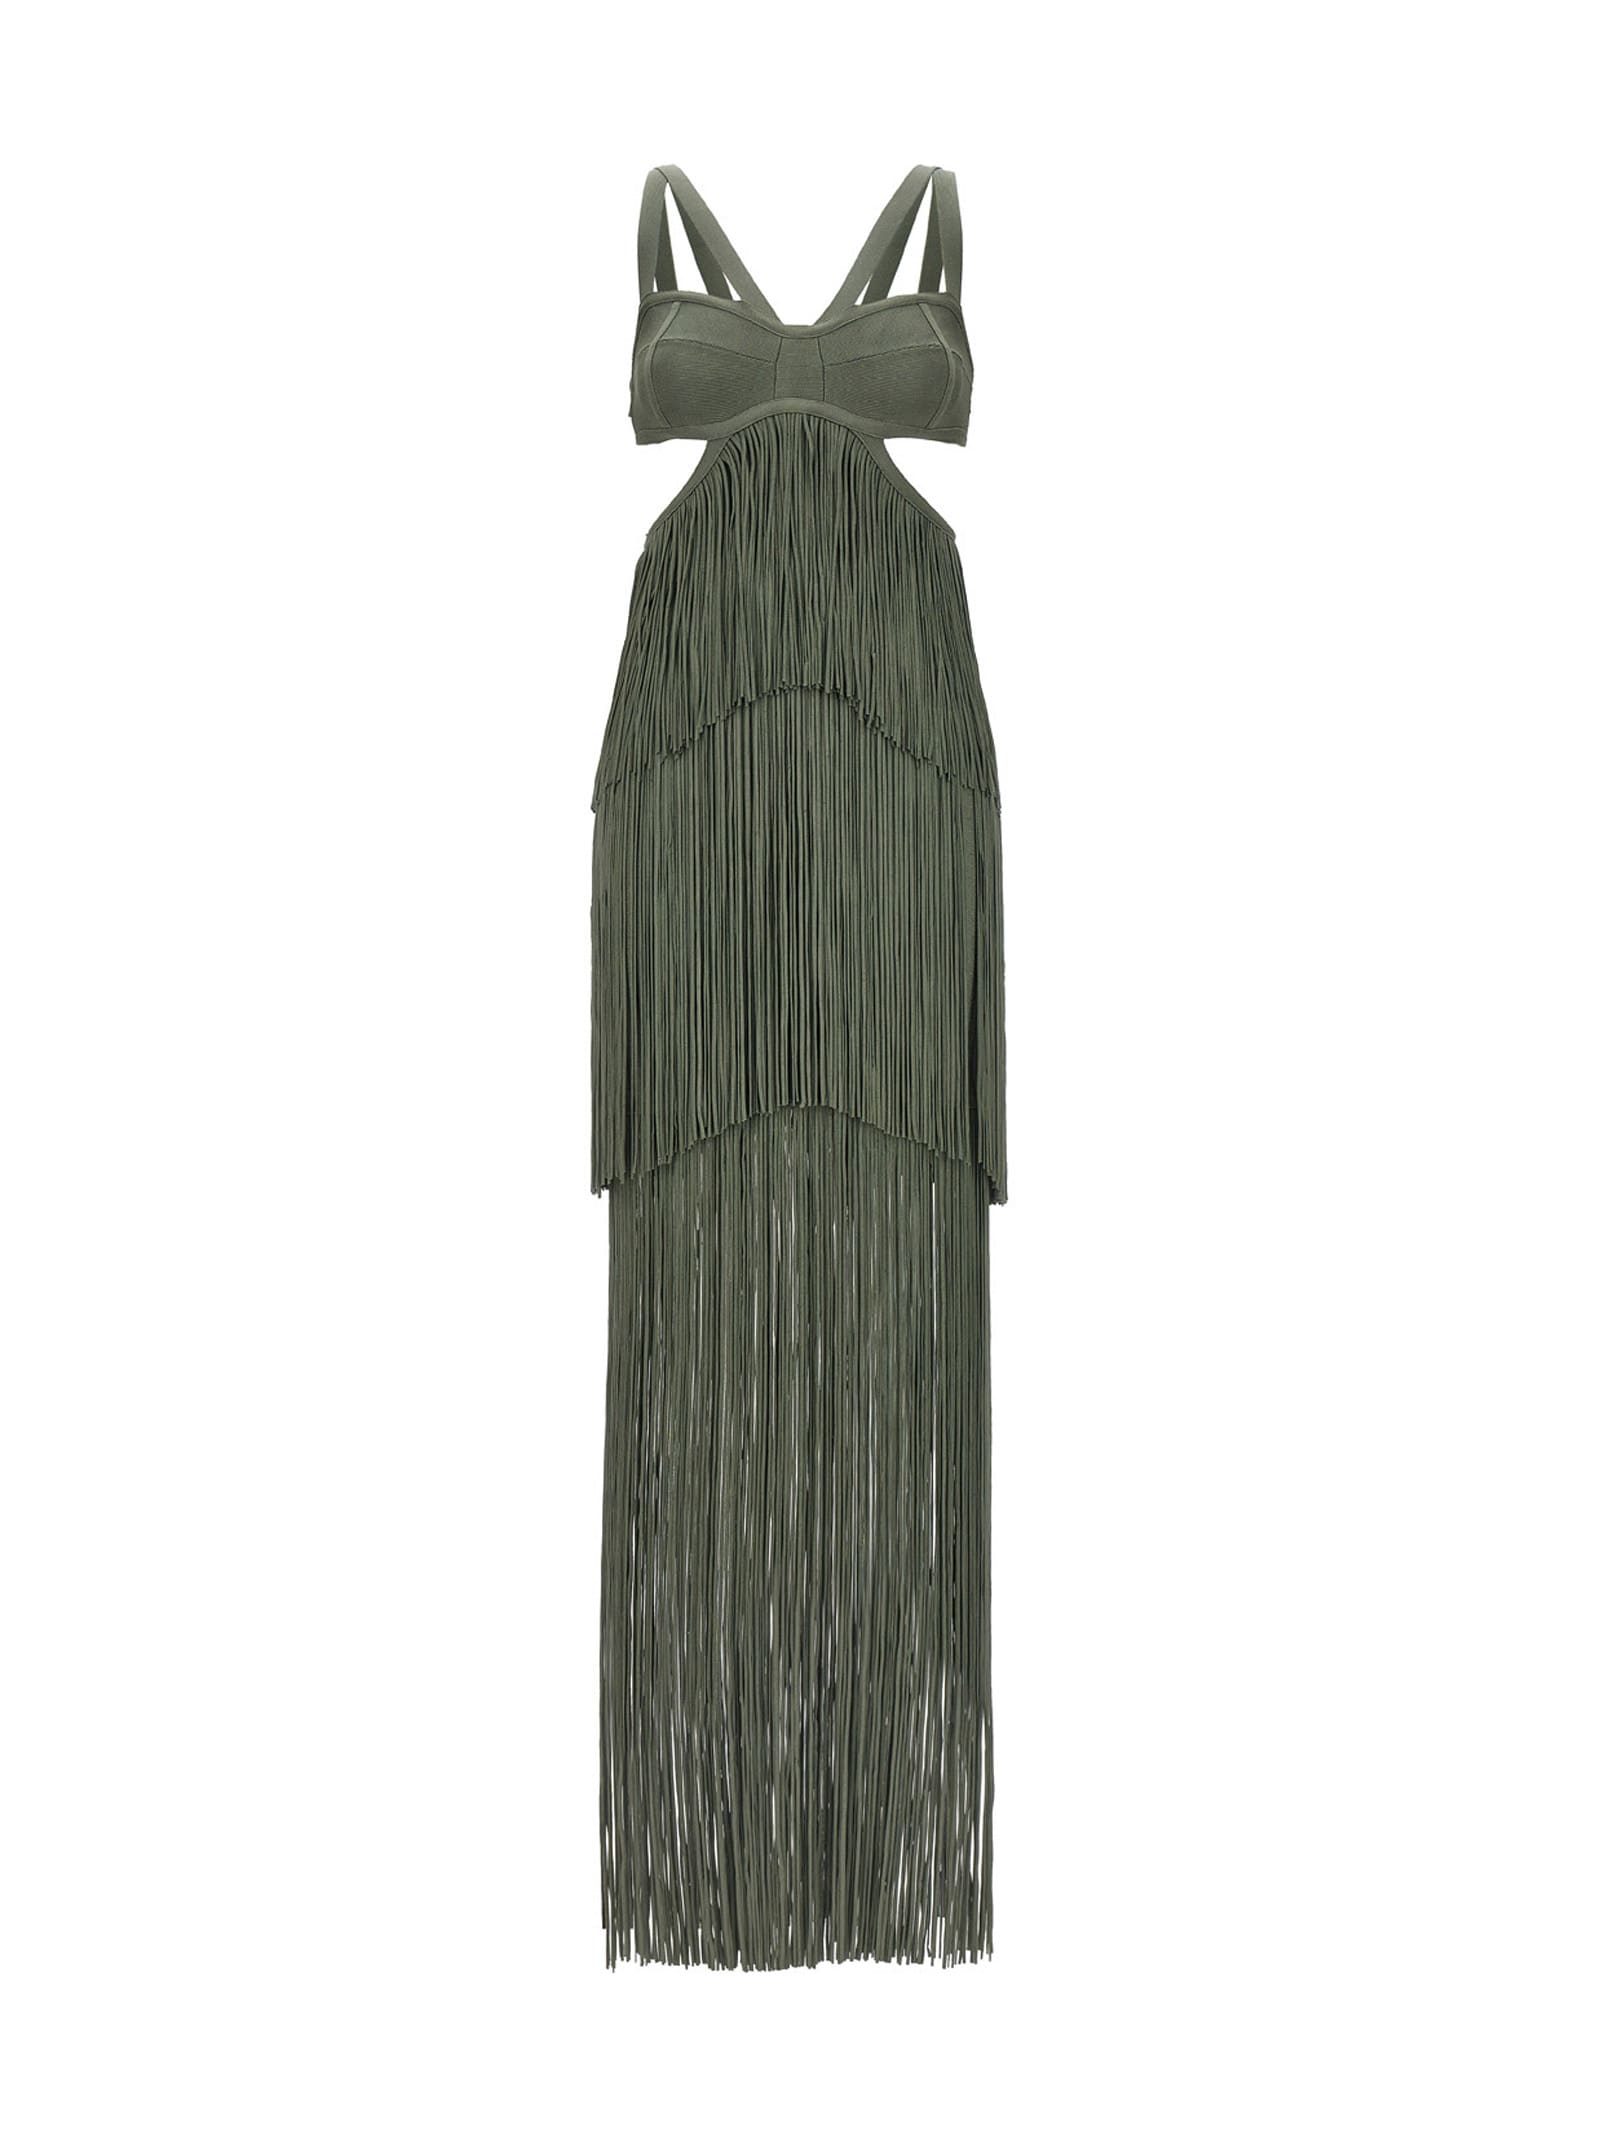 Hervé Léger strappy Tiered Fringe Dress